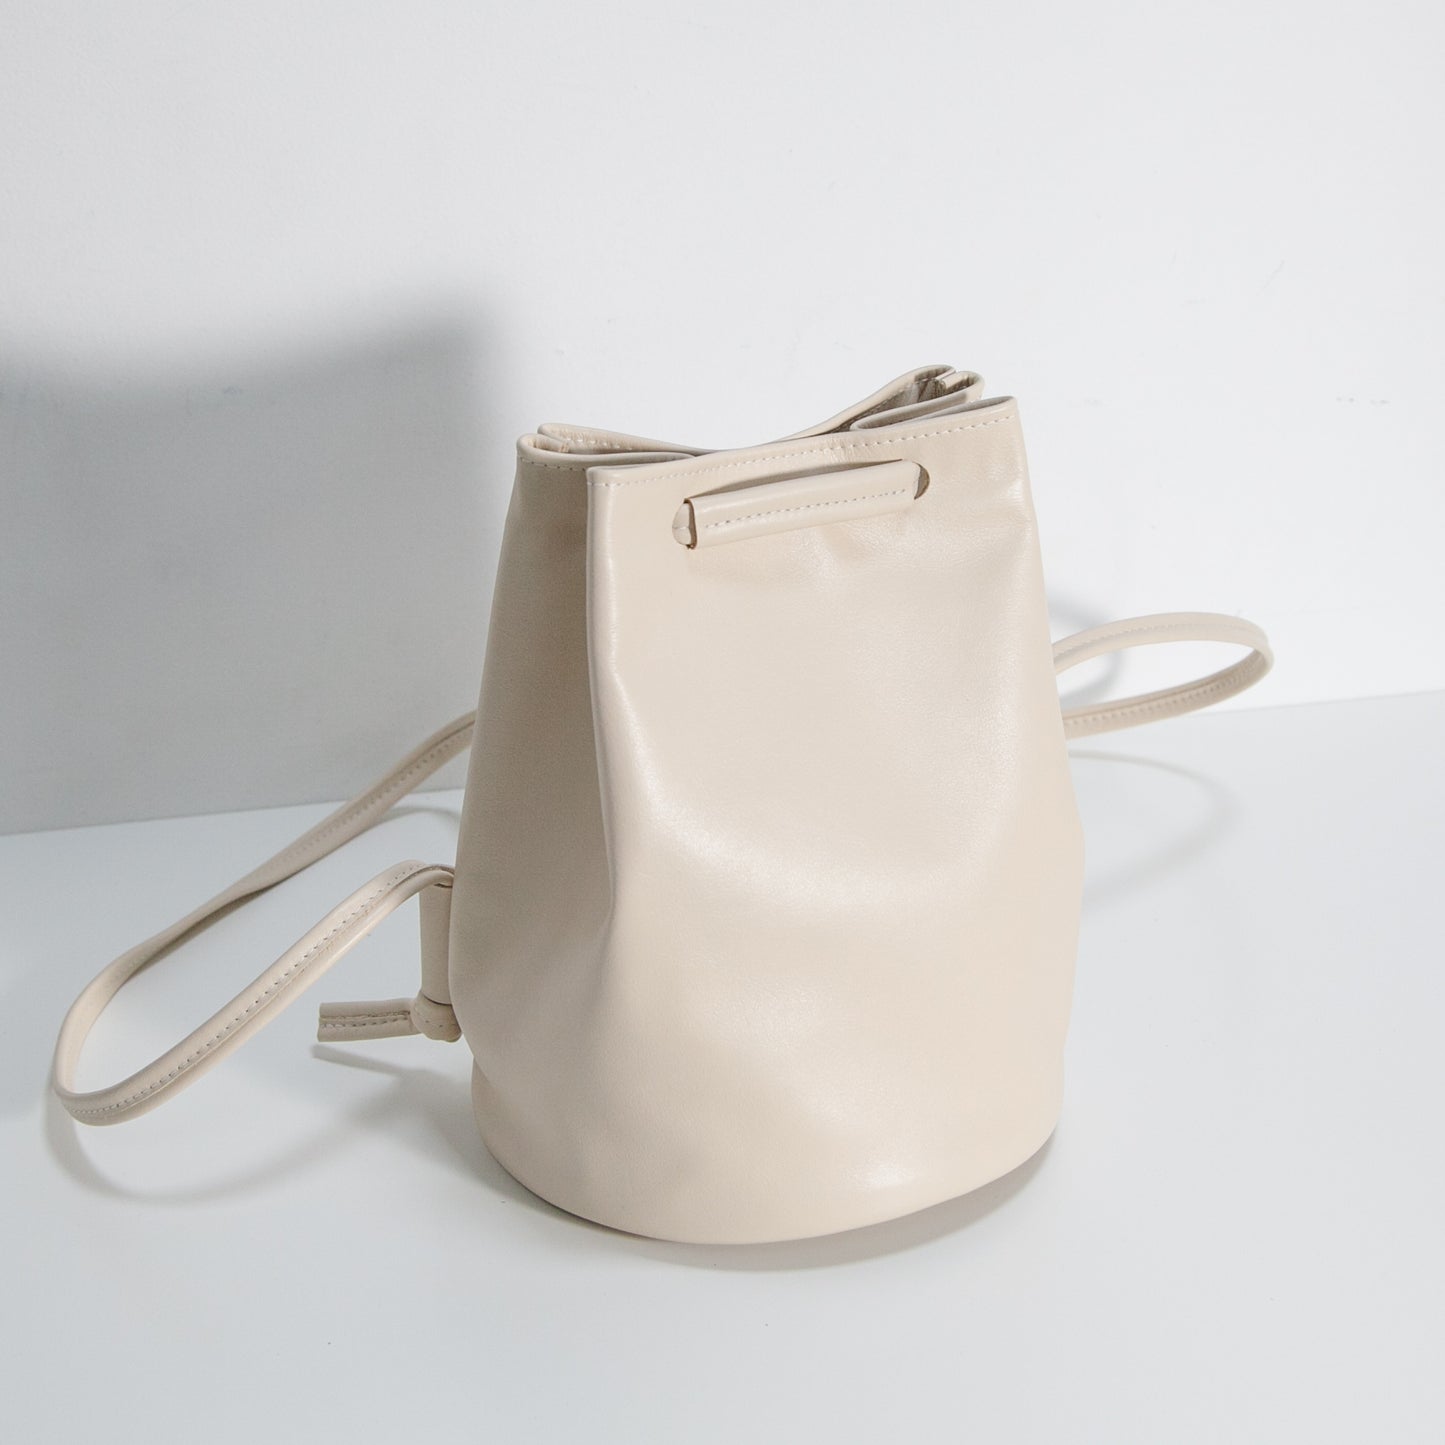 June Backpack | Cream